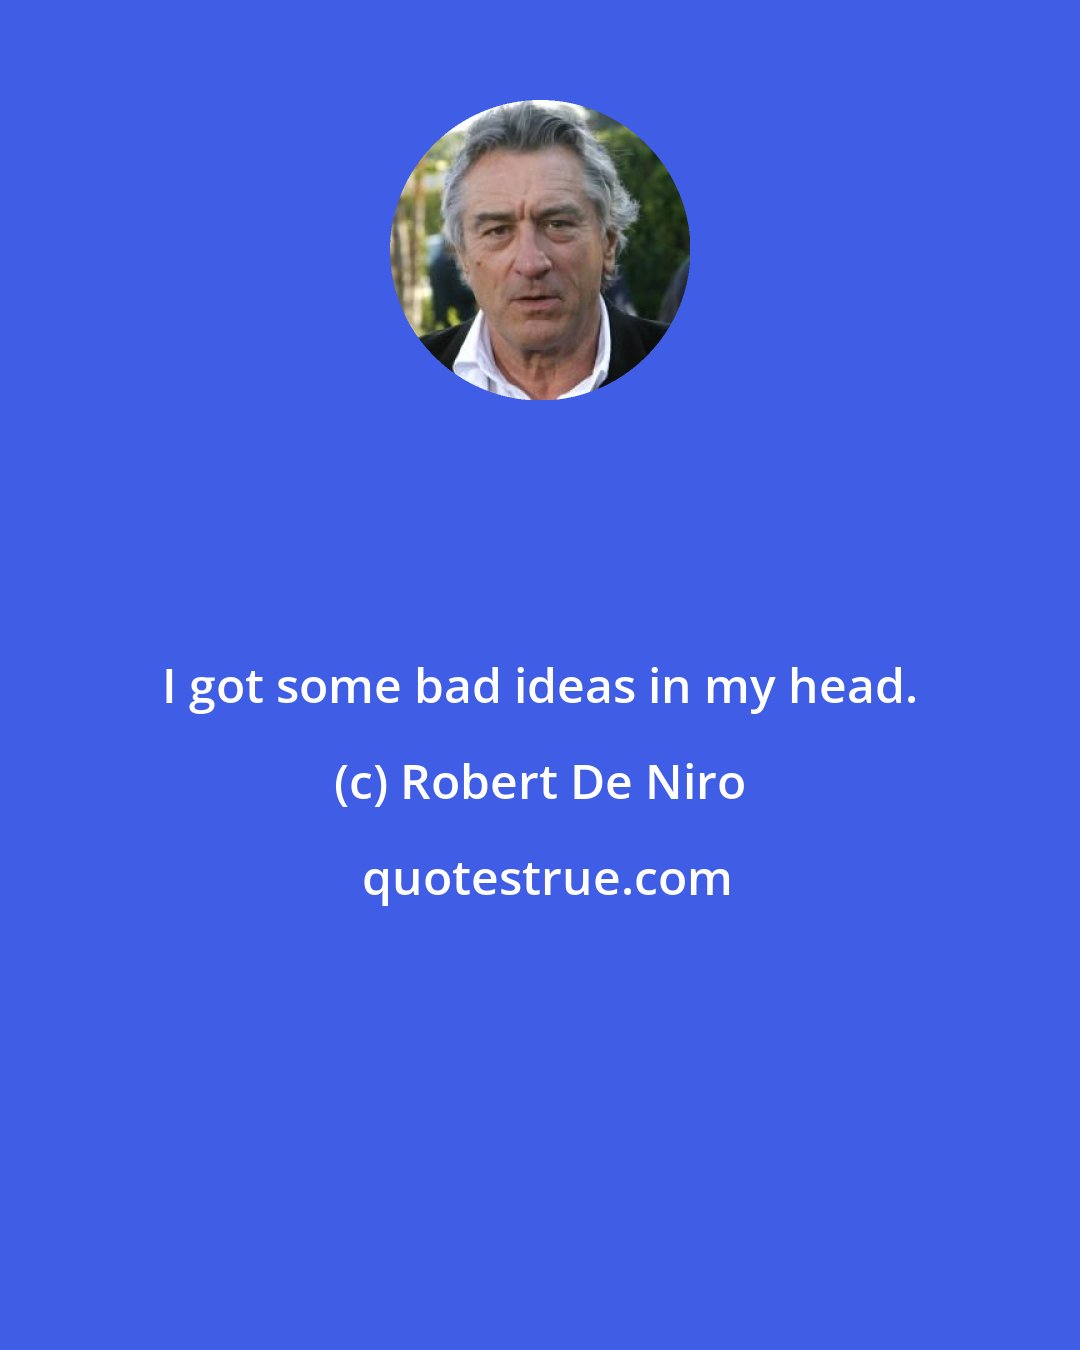 Robert De Niro: I got some bad ideas in my head.